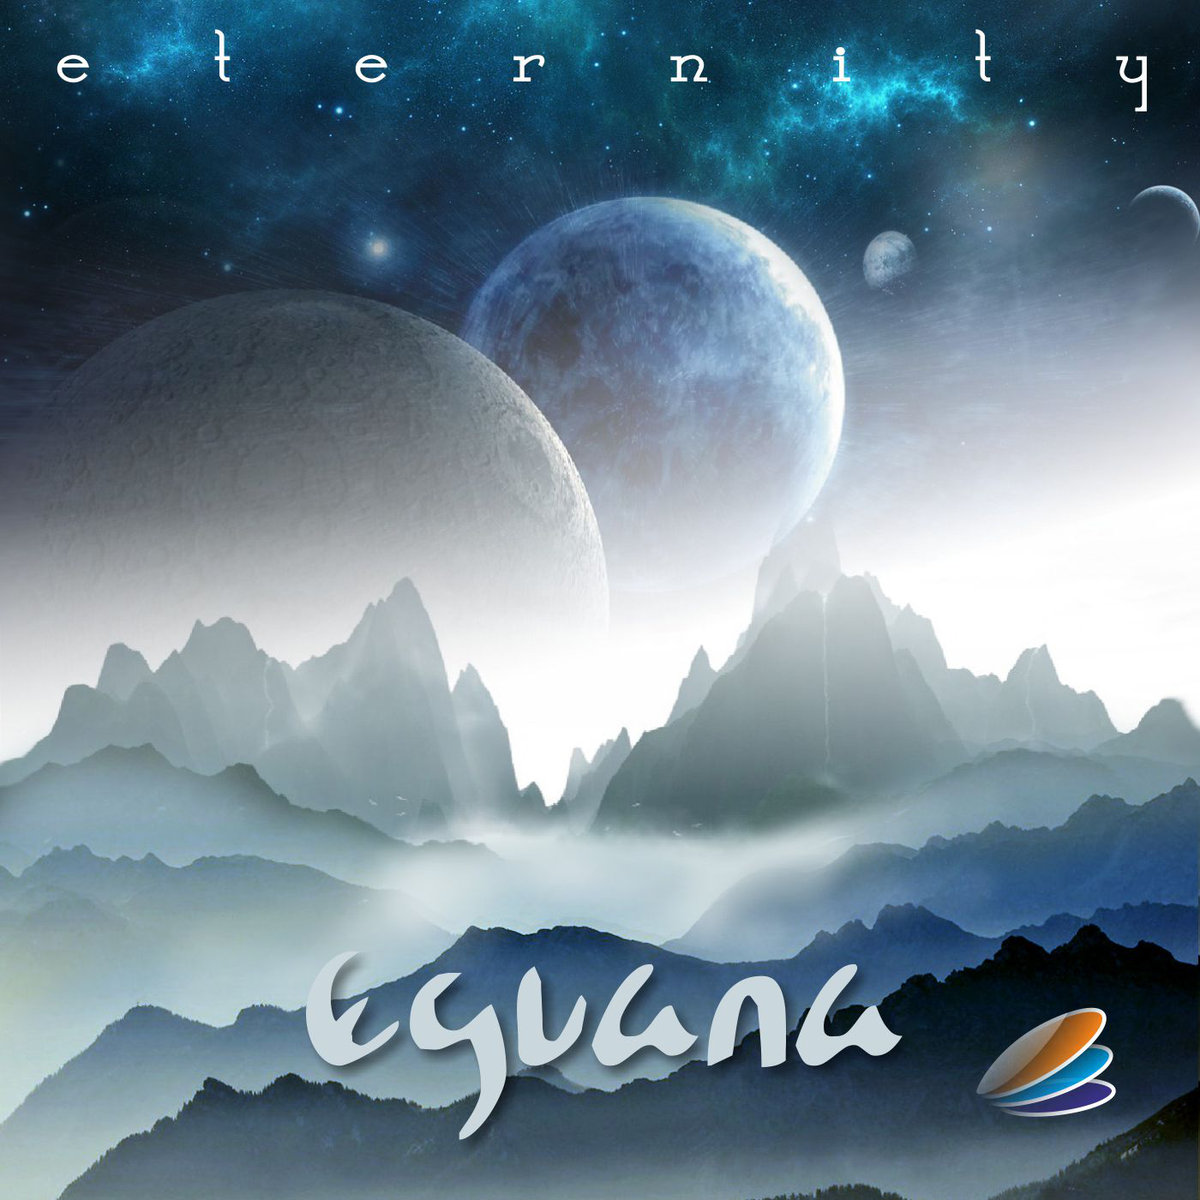 Eguana - Eternity